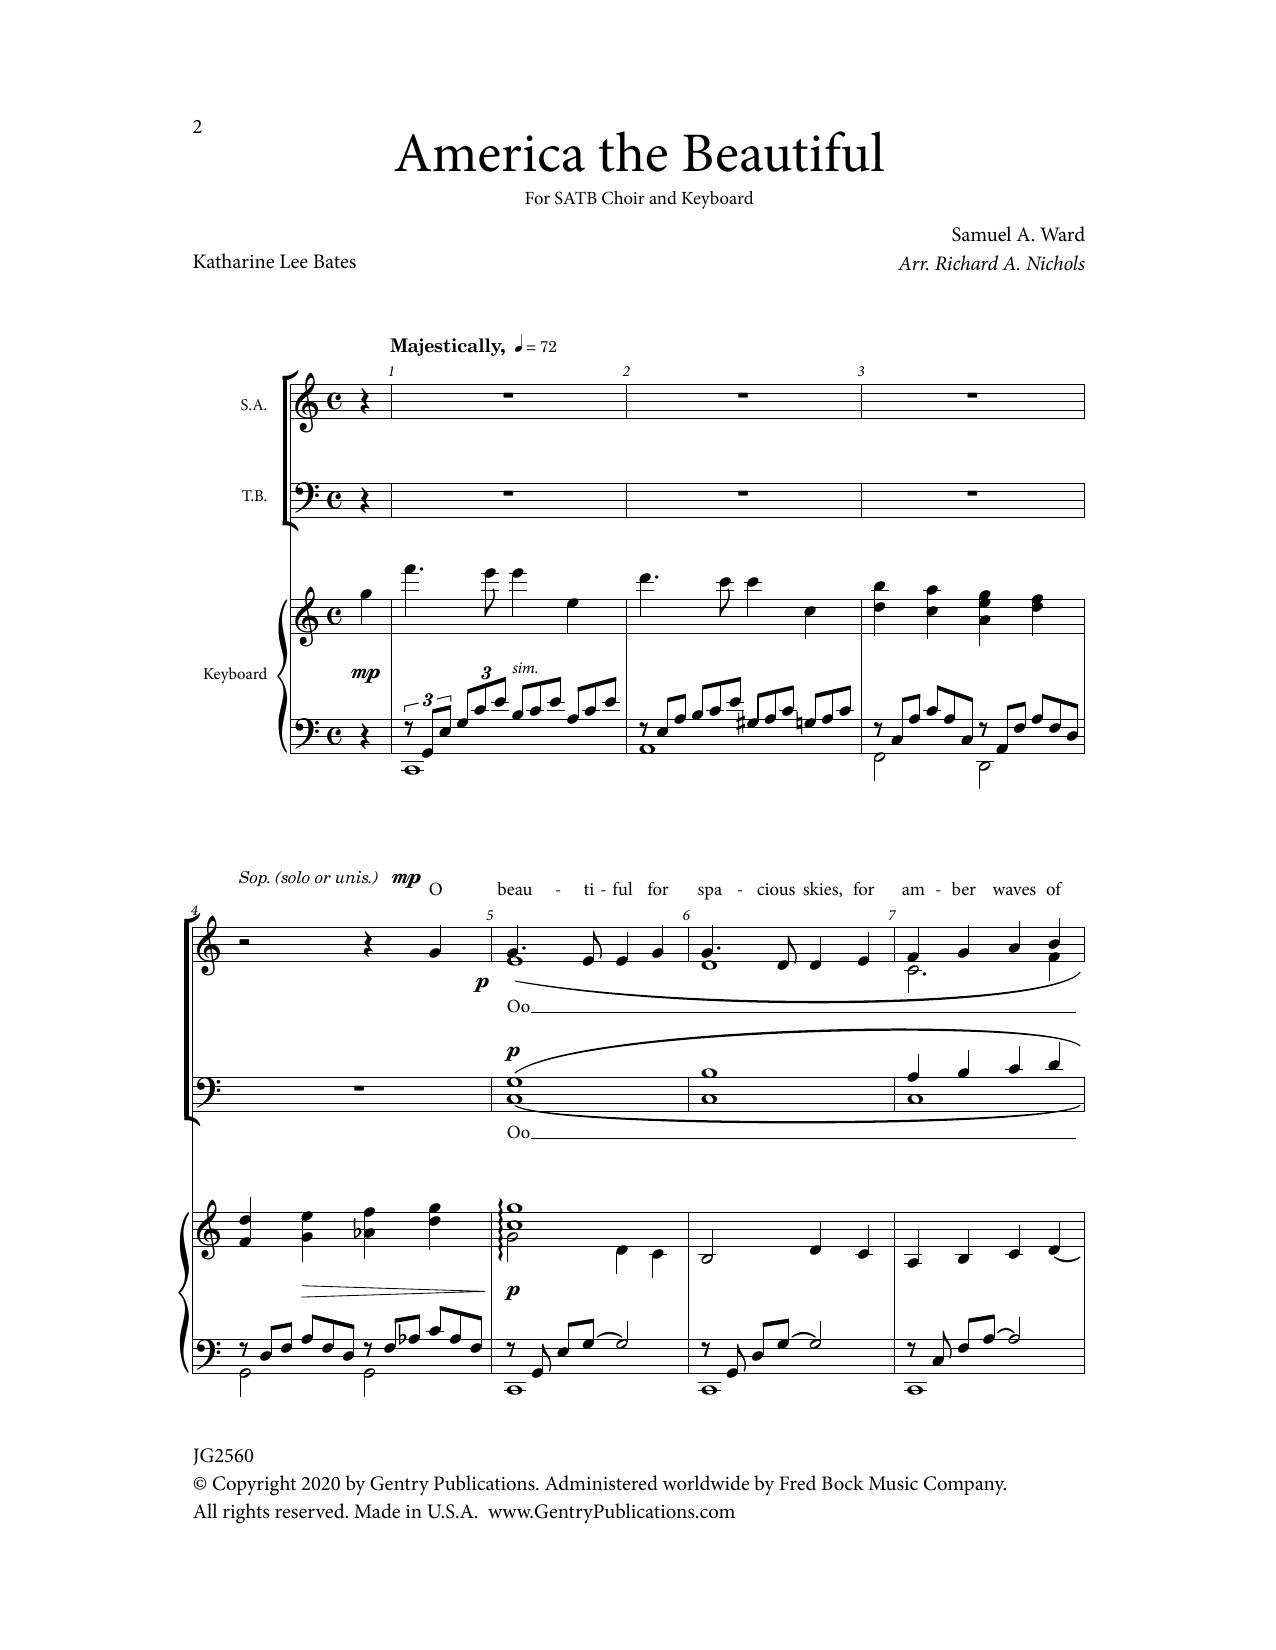 Richard Nichols America The Beautiful Sheet Music Notes & Chords for SATB Choir - Download or Print PDF